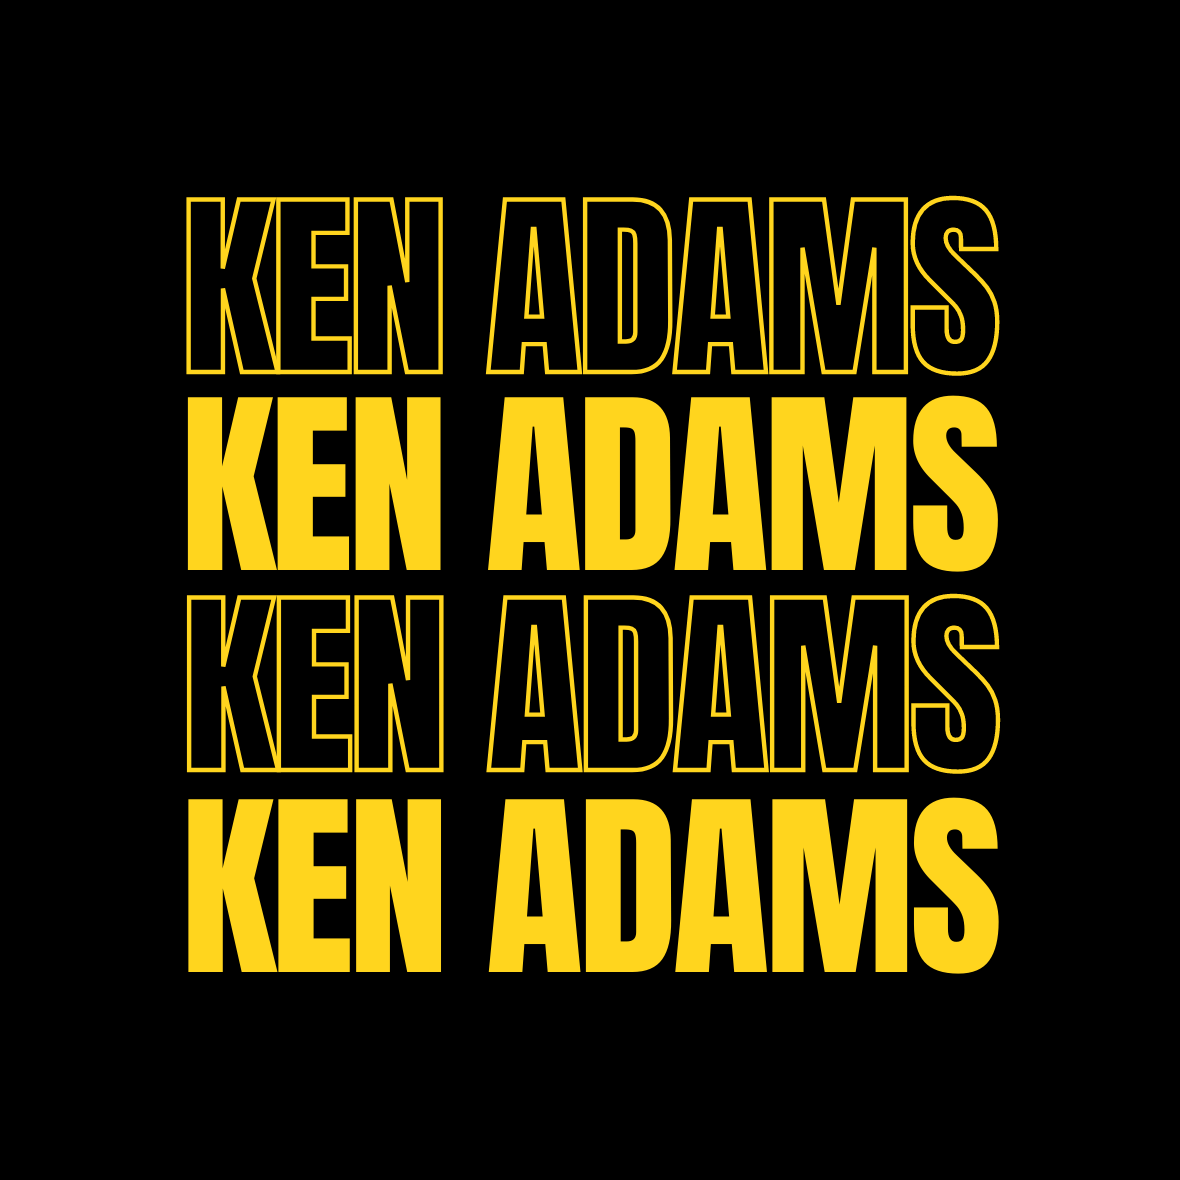 Ken Adams Official - Ken Adams